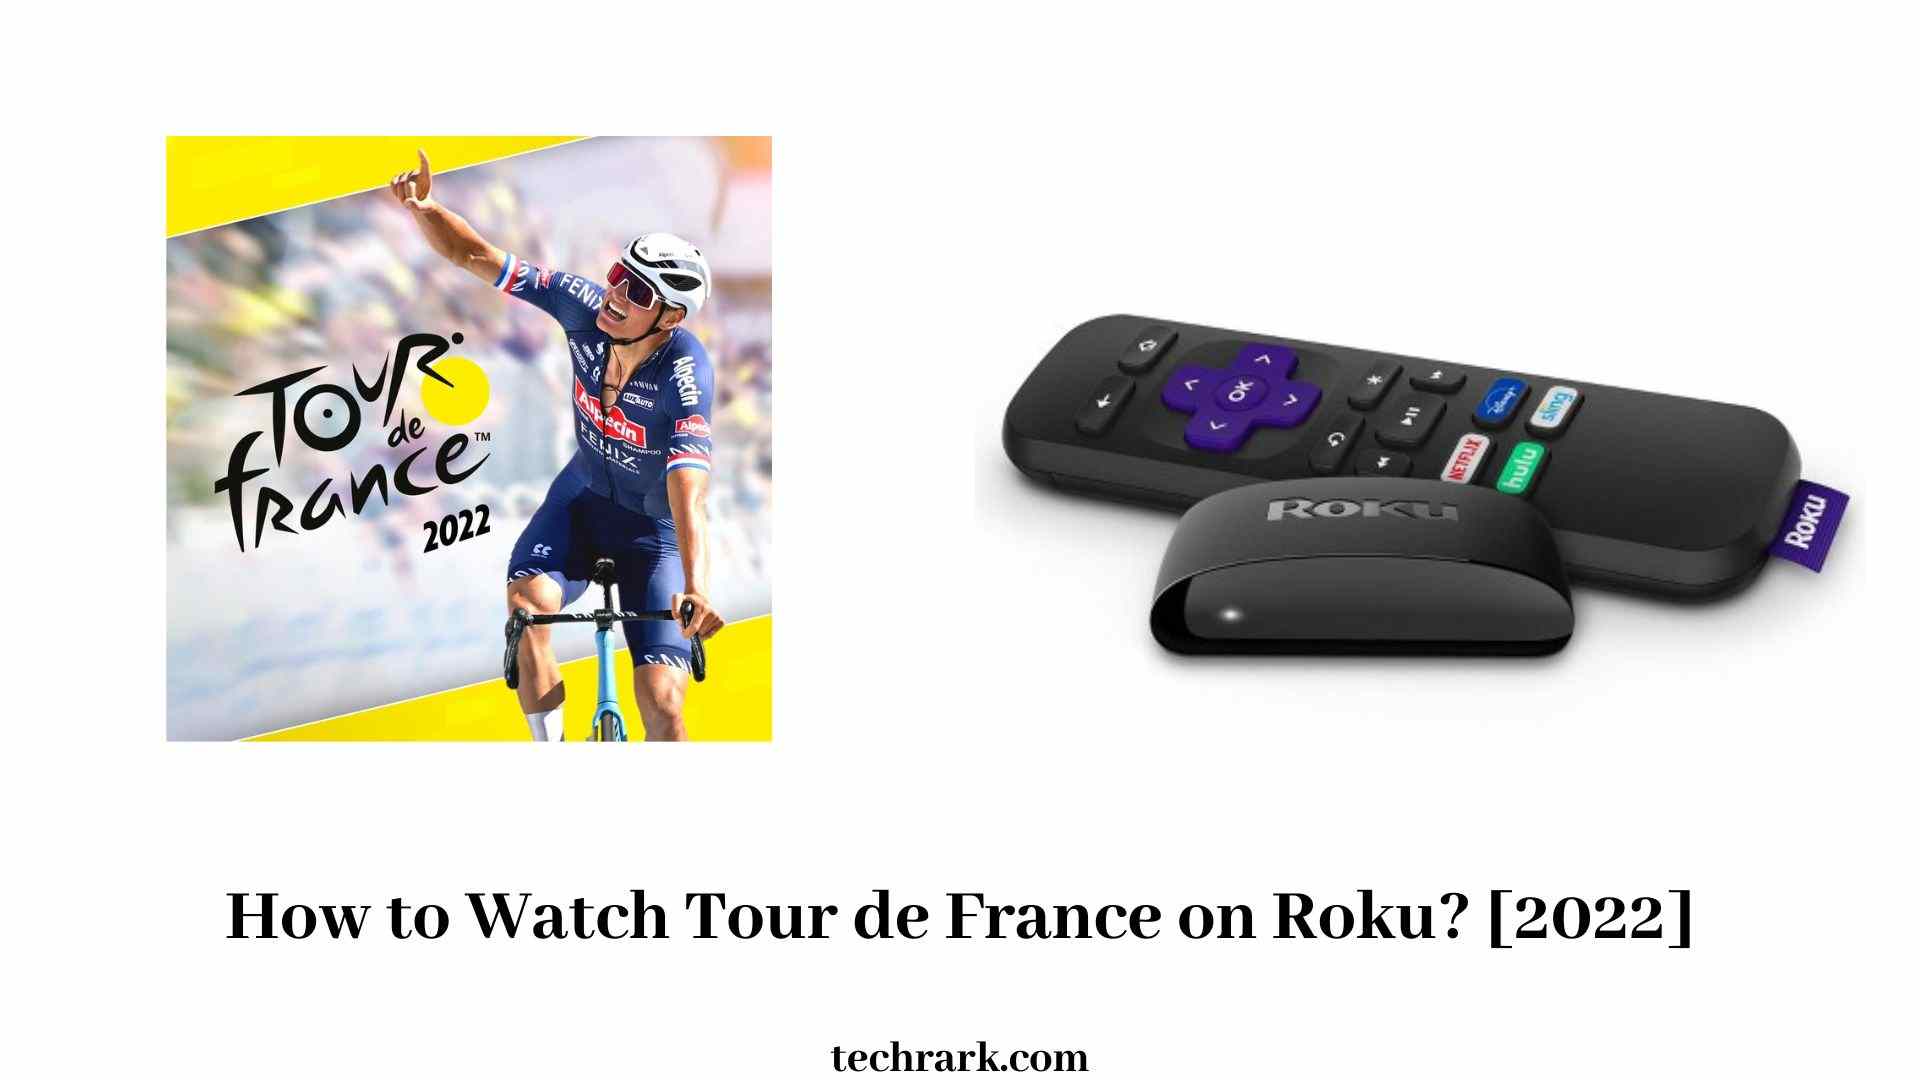 Tour de France on Roku